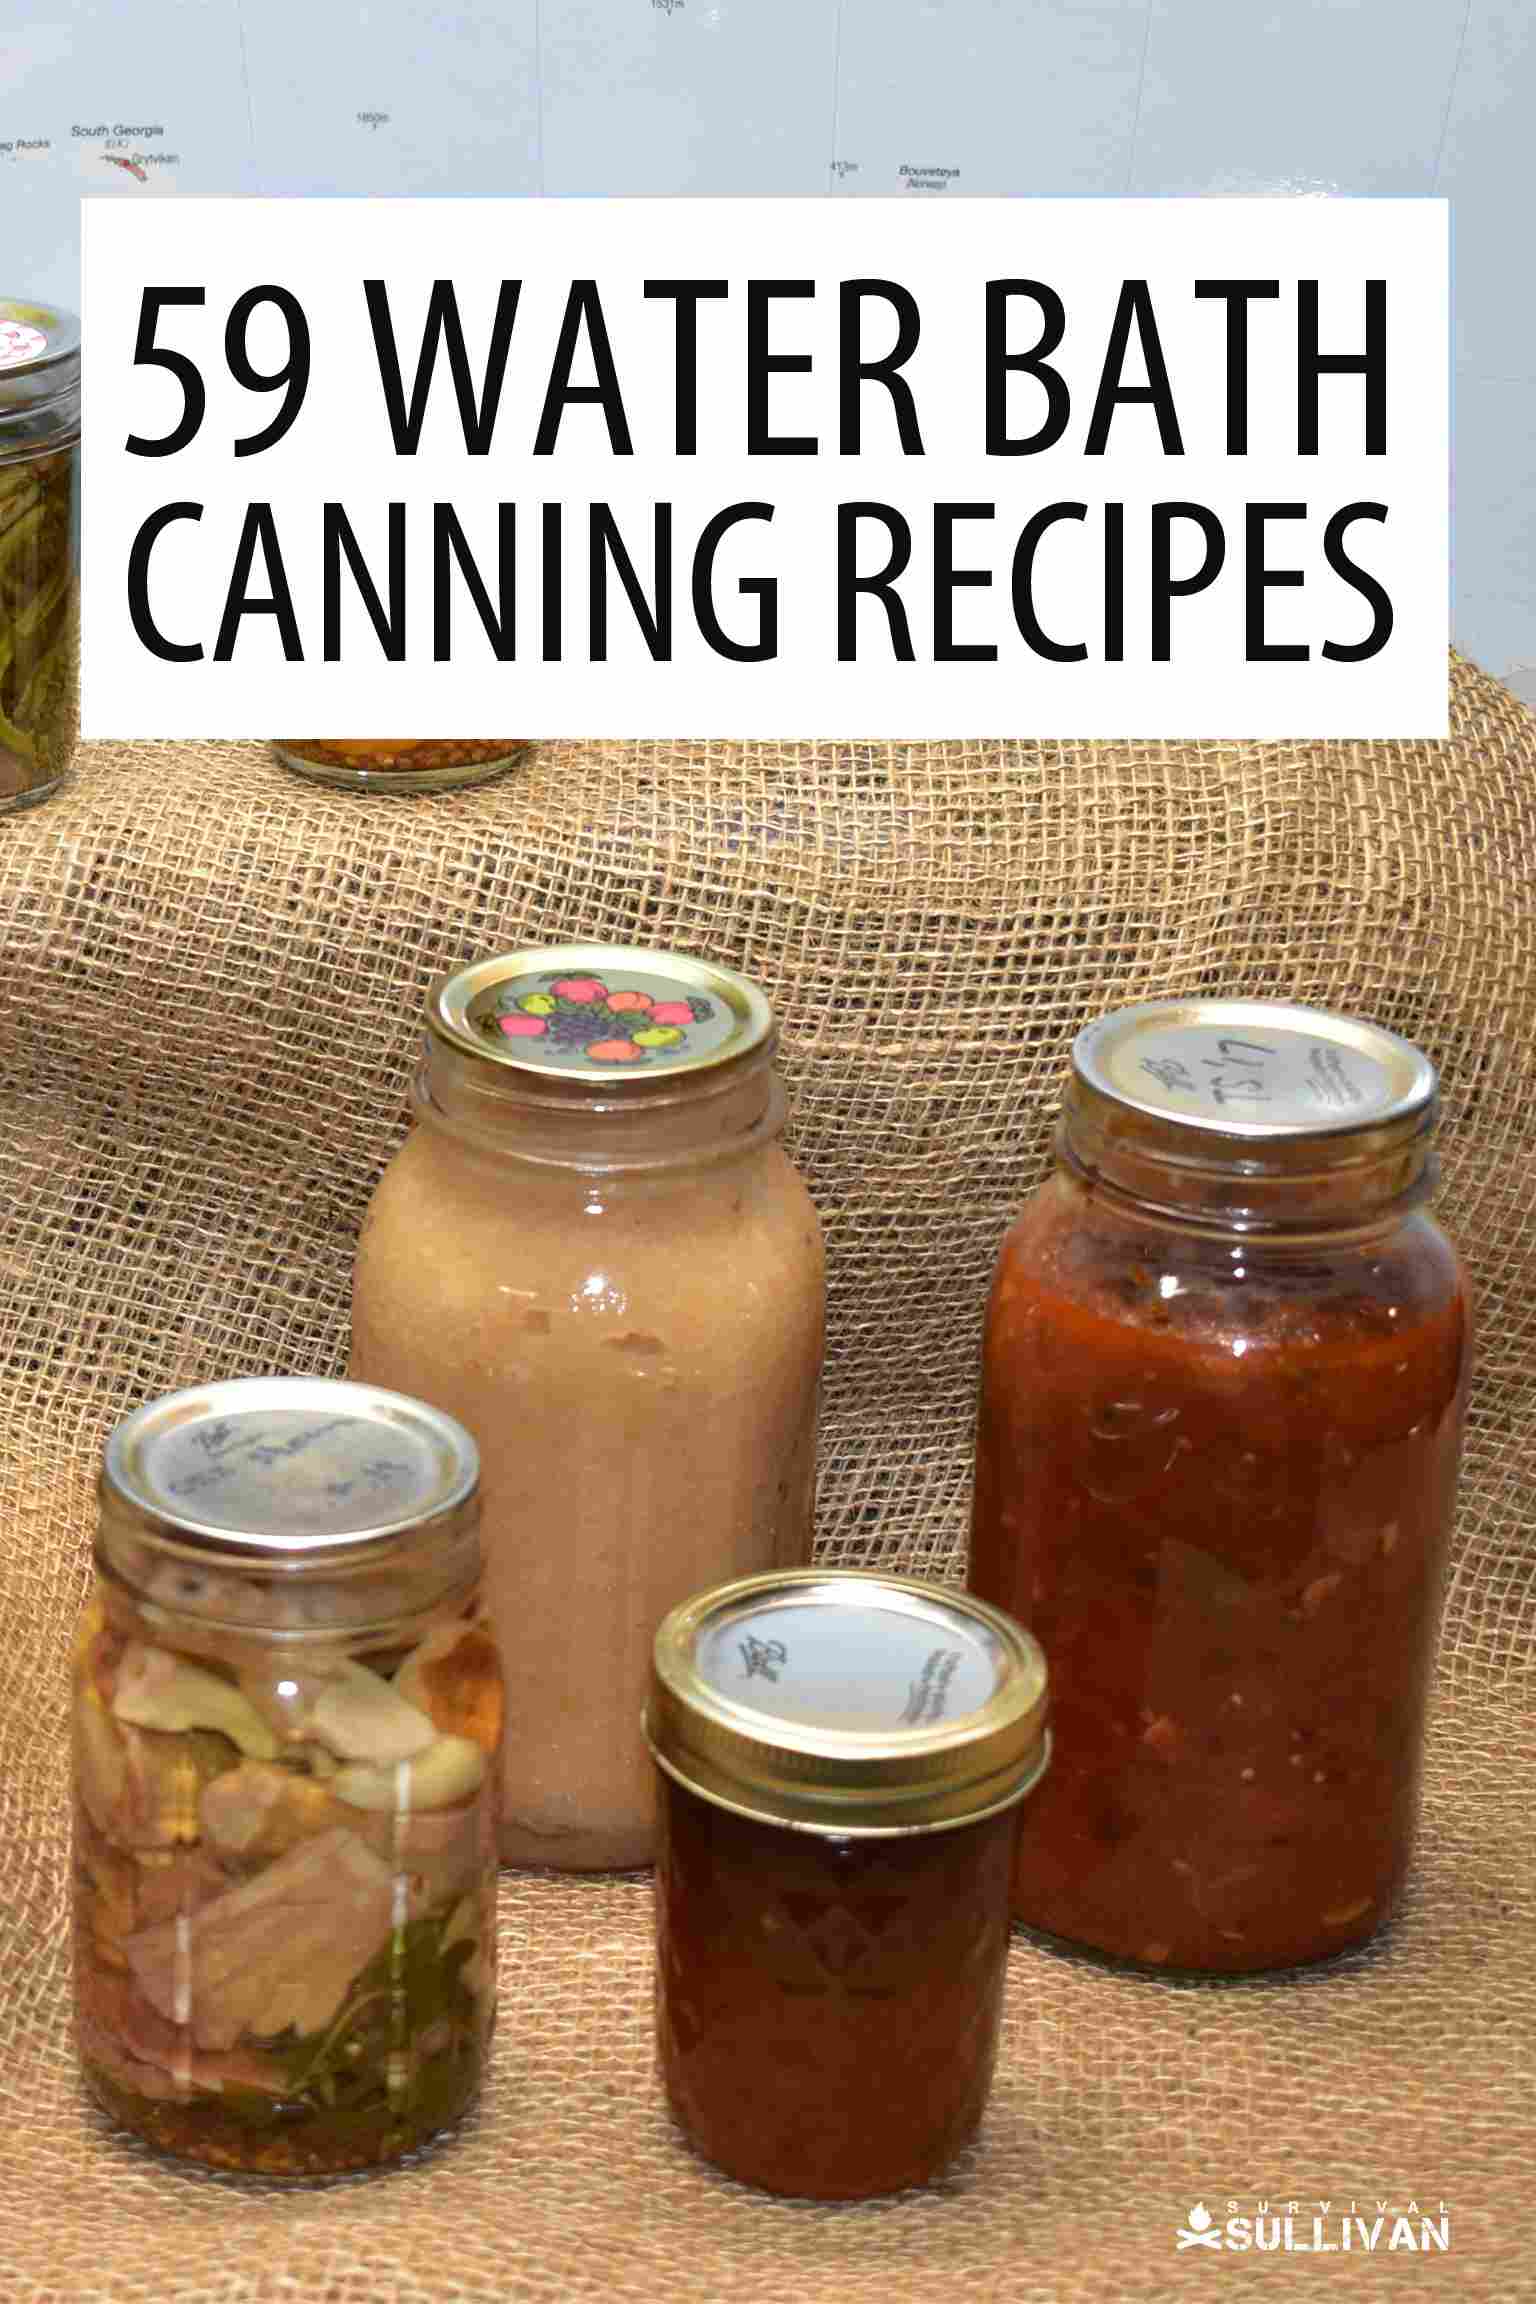 water bath canning recipes Pinterest iamge